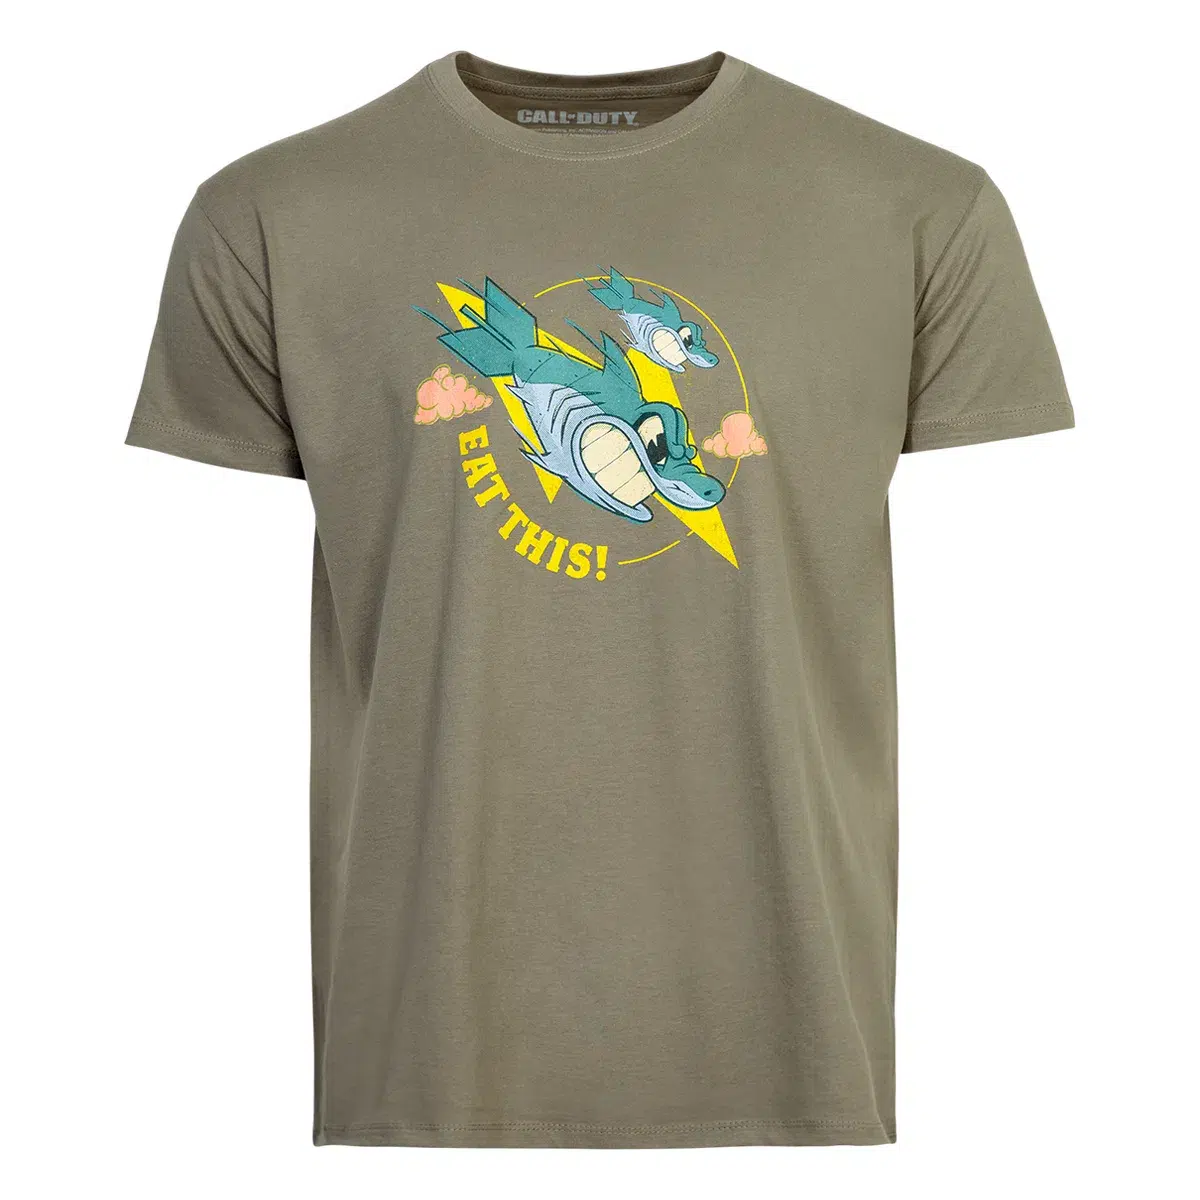 Call of Duty: T-Shirt "Shark" Khaki